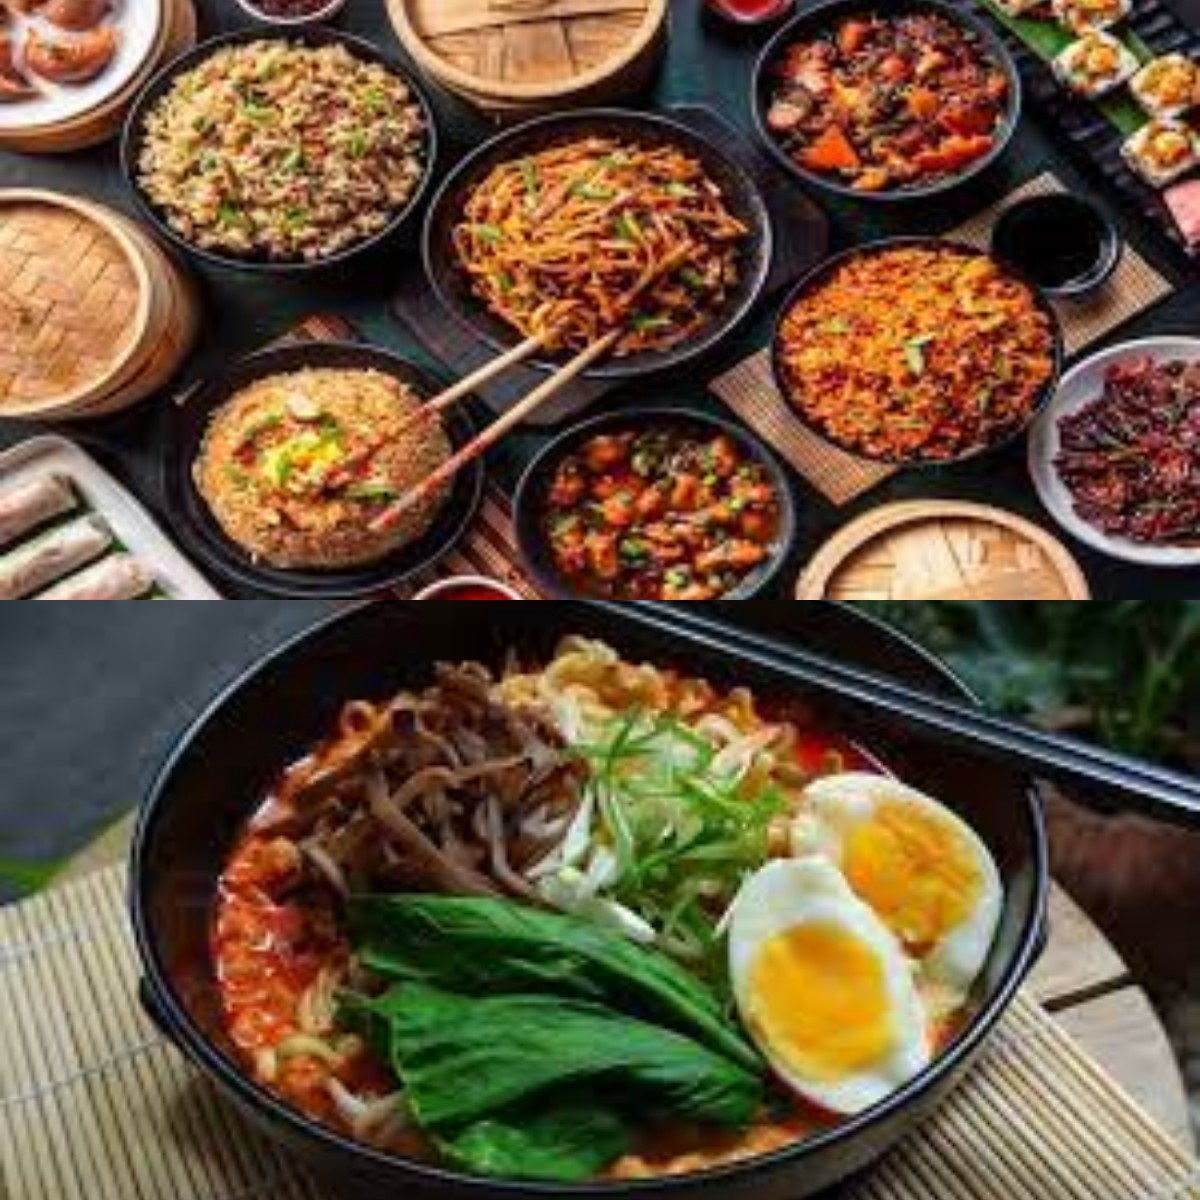 Mengenal Ragam Kuliner! Inilah 10 Masakan Oriental dengan Cita Rasa yang Khas dari Berbagai Negara di Dunia